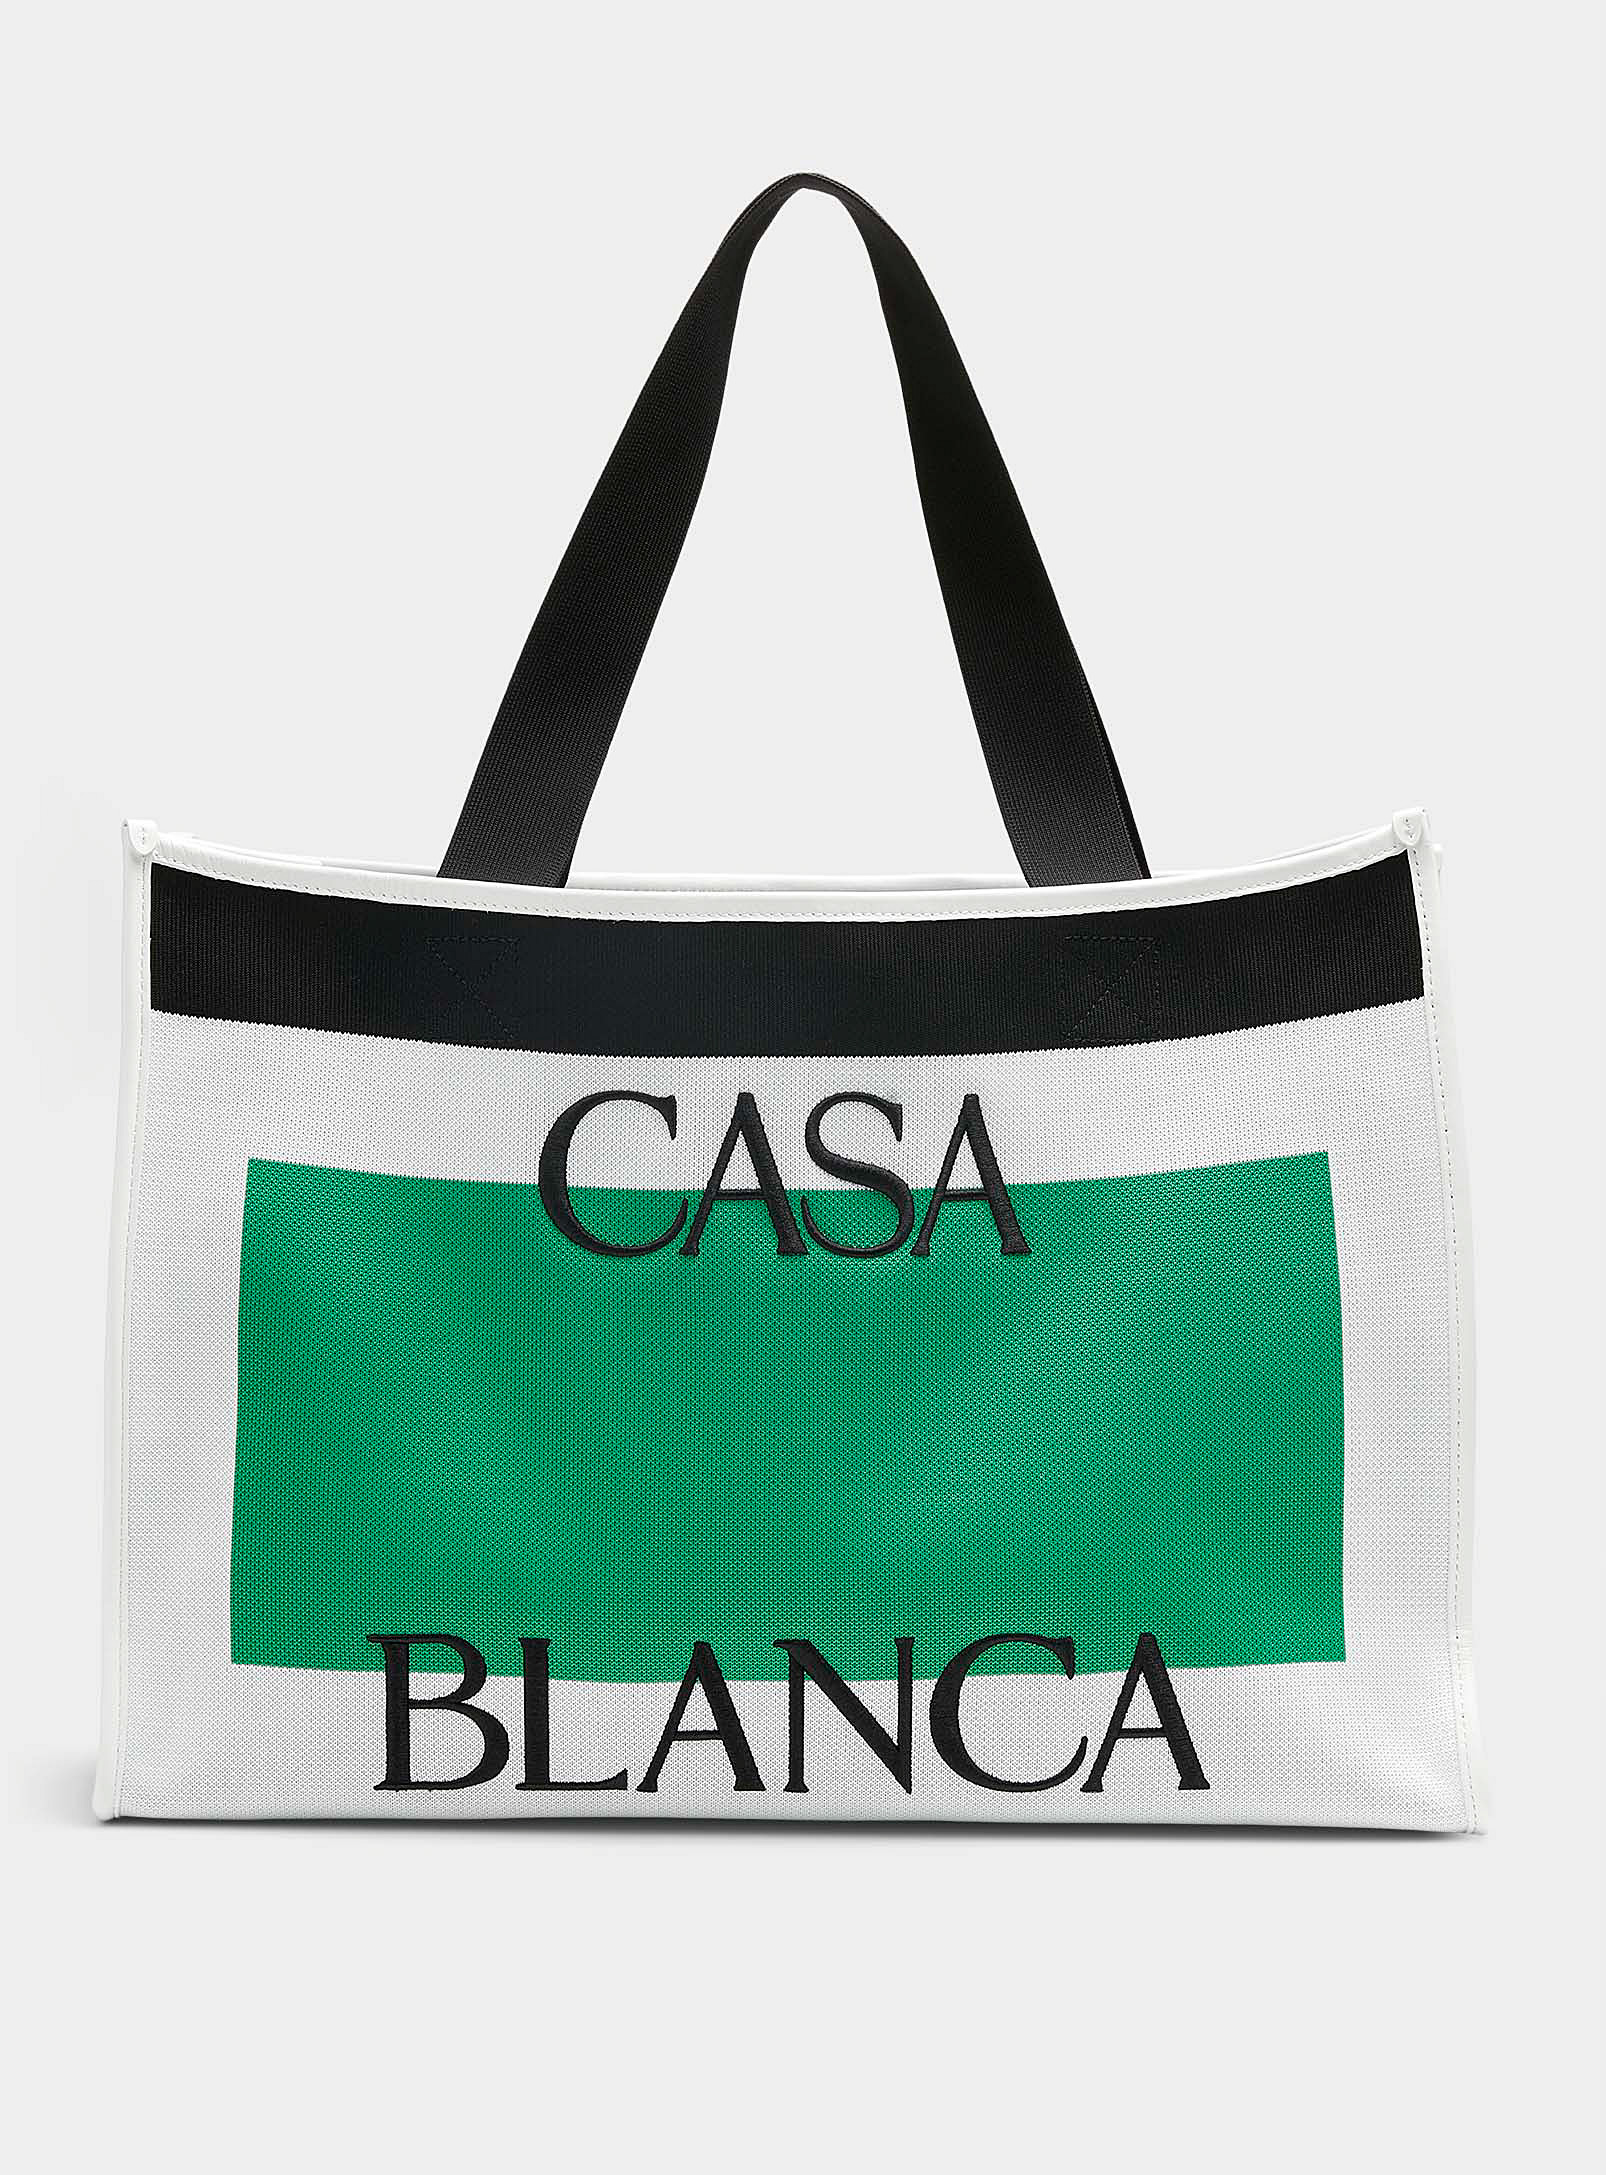 Casablanca - Men's Shopper knit bag